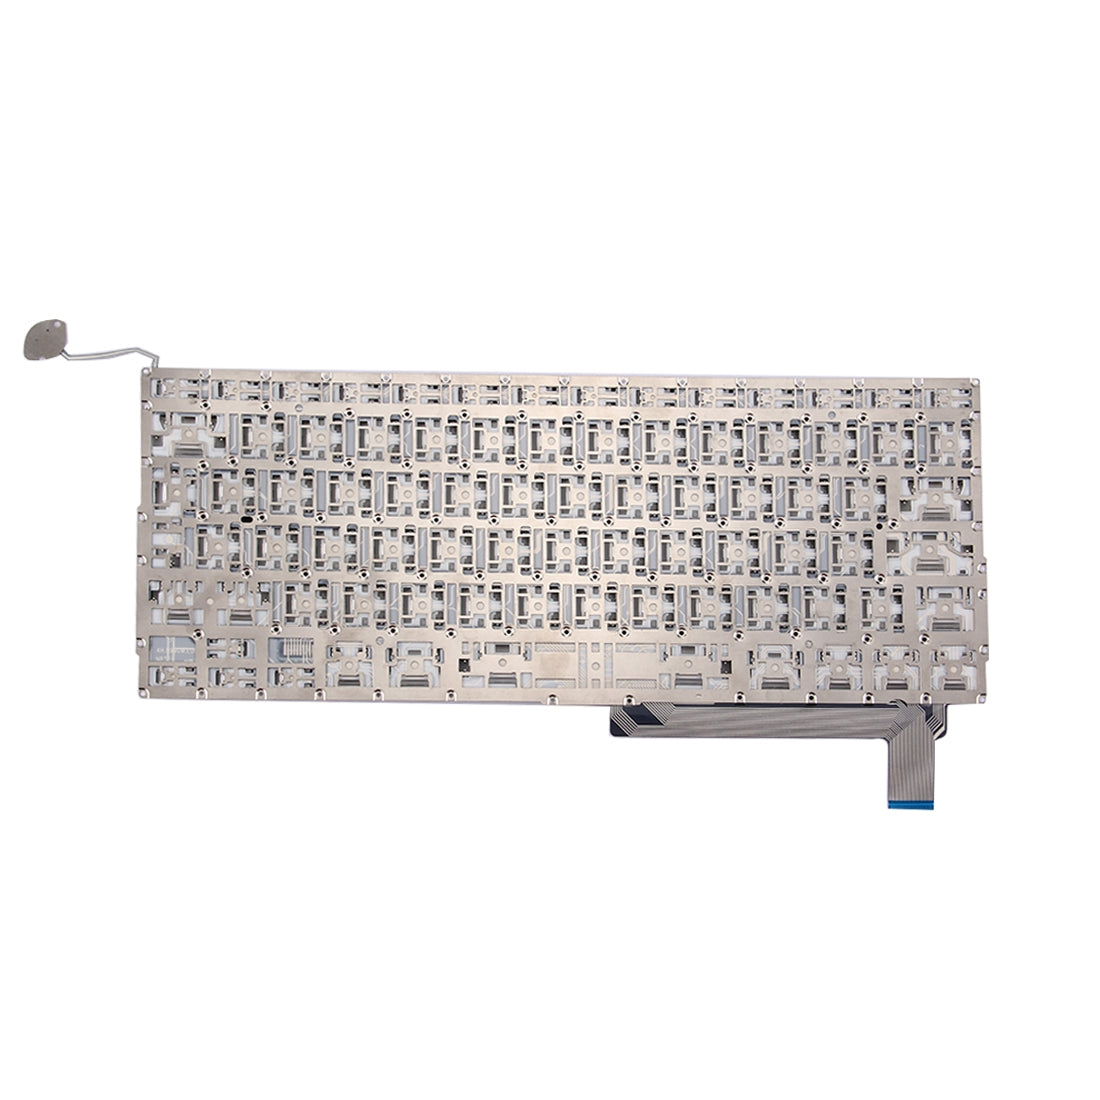 Spanish keyboard with ñ Apple MacBook Pro 15 A1286 2009 2012